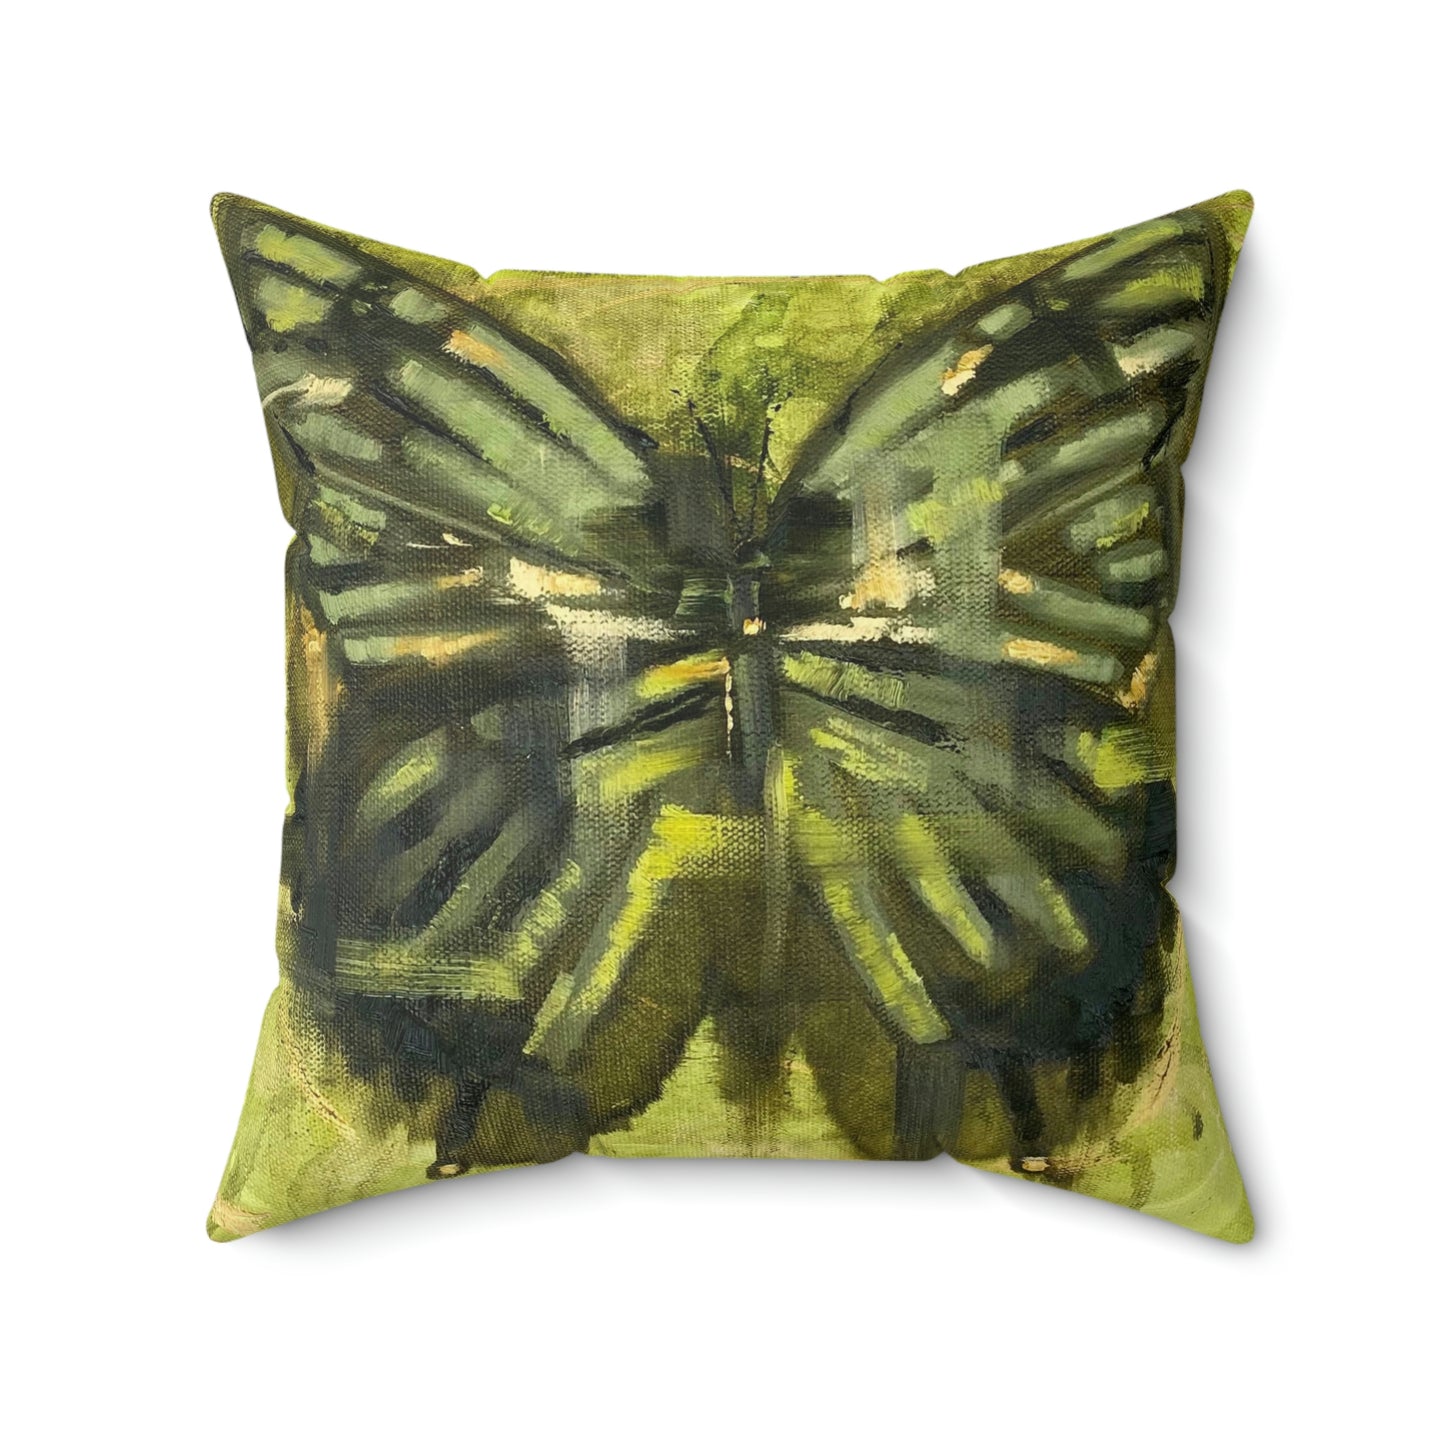 Green Butterfly Throw Pillow | Home Decor | Living Room Decor